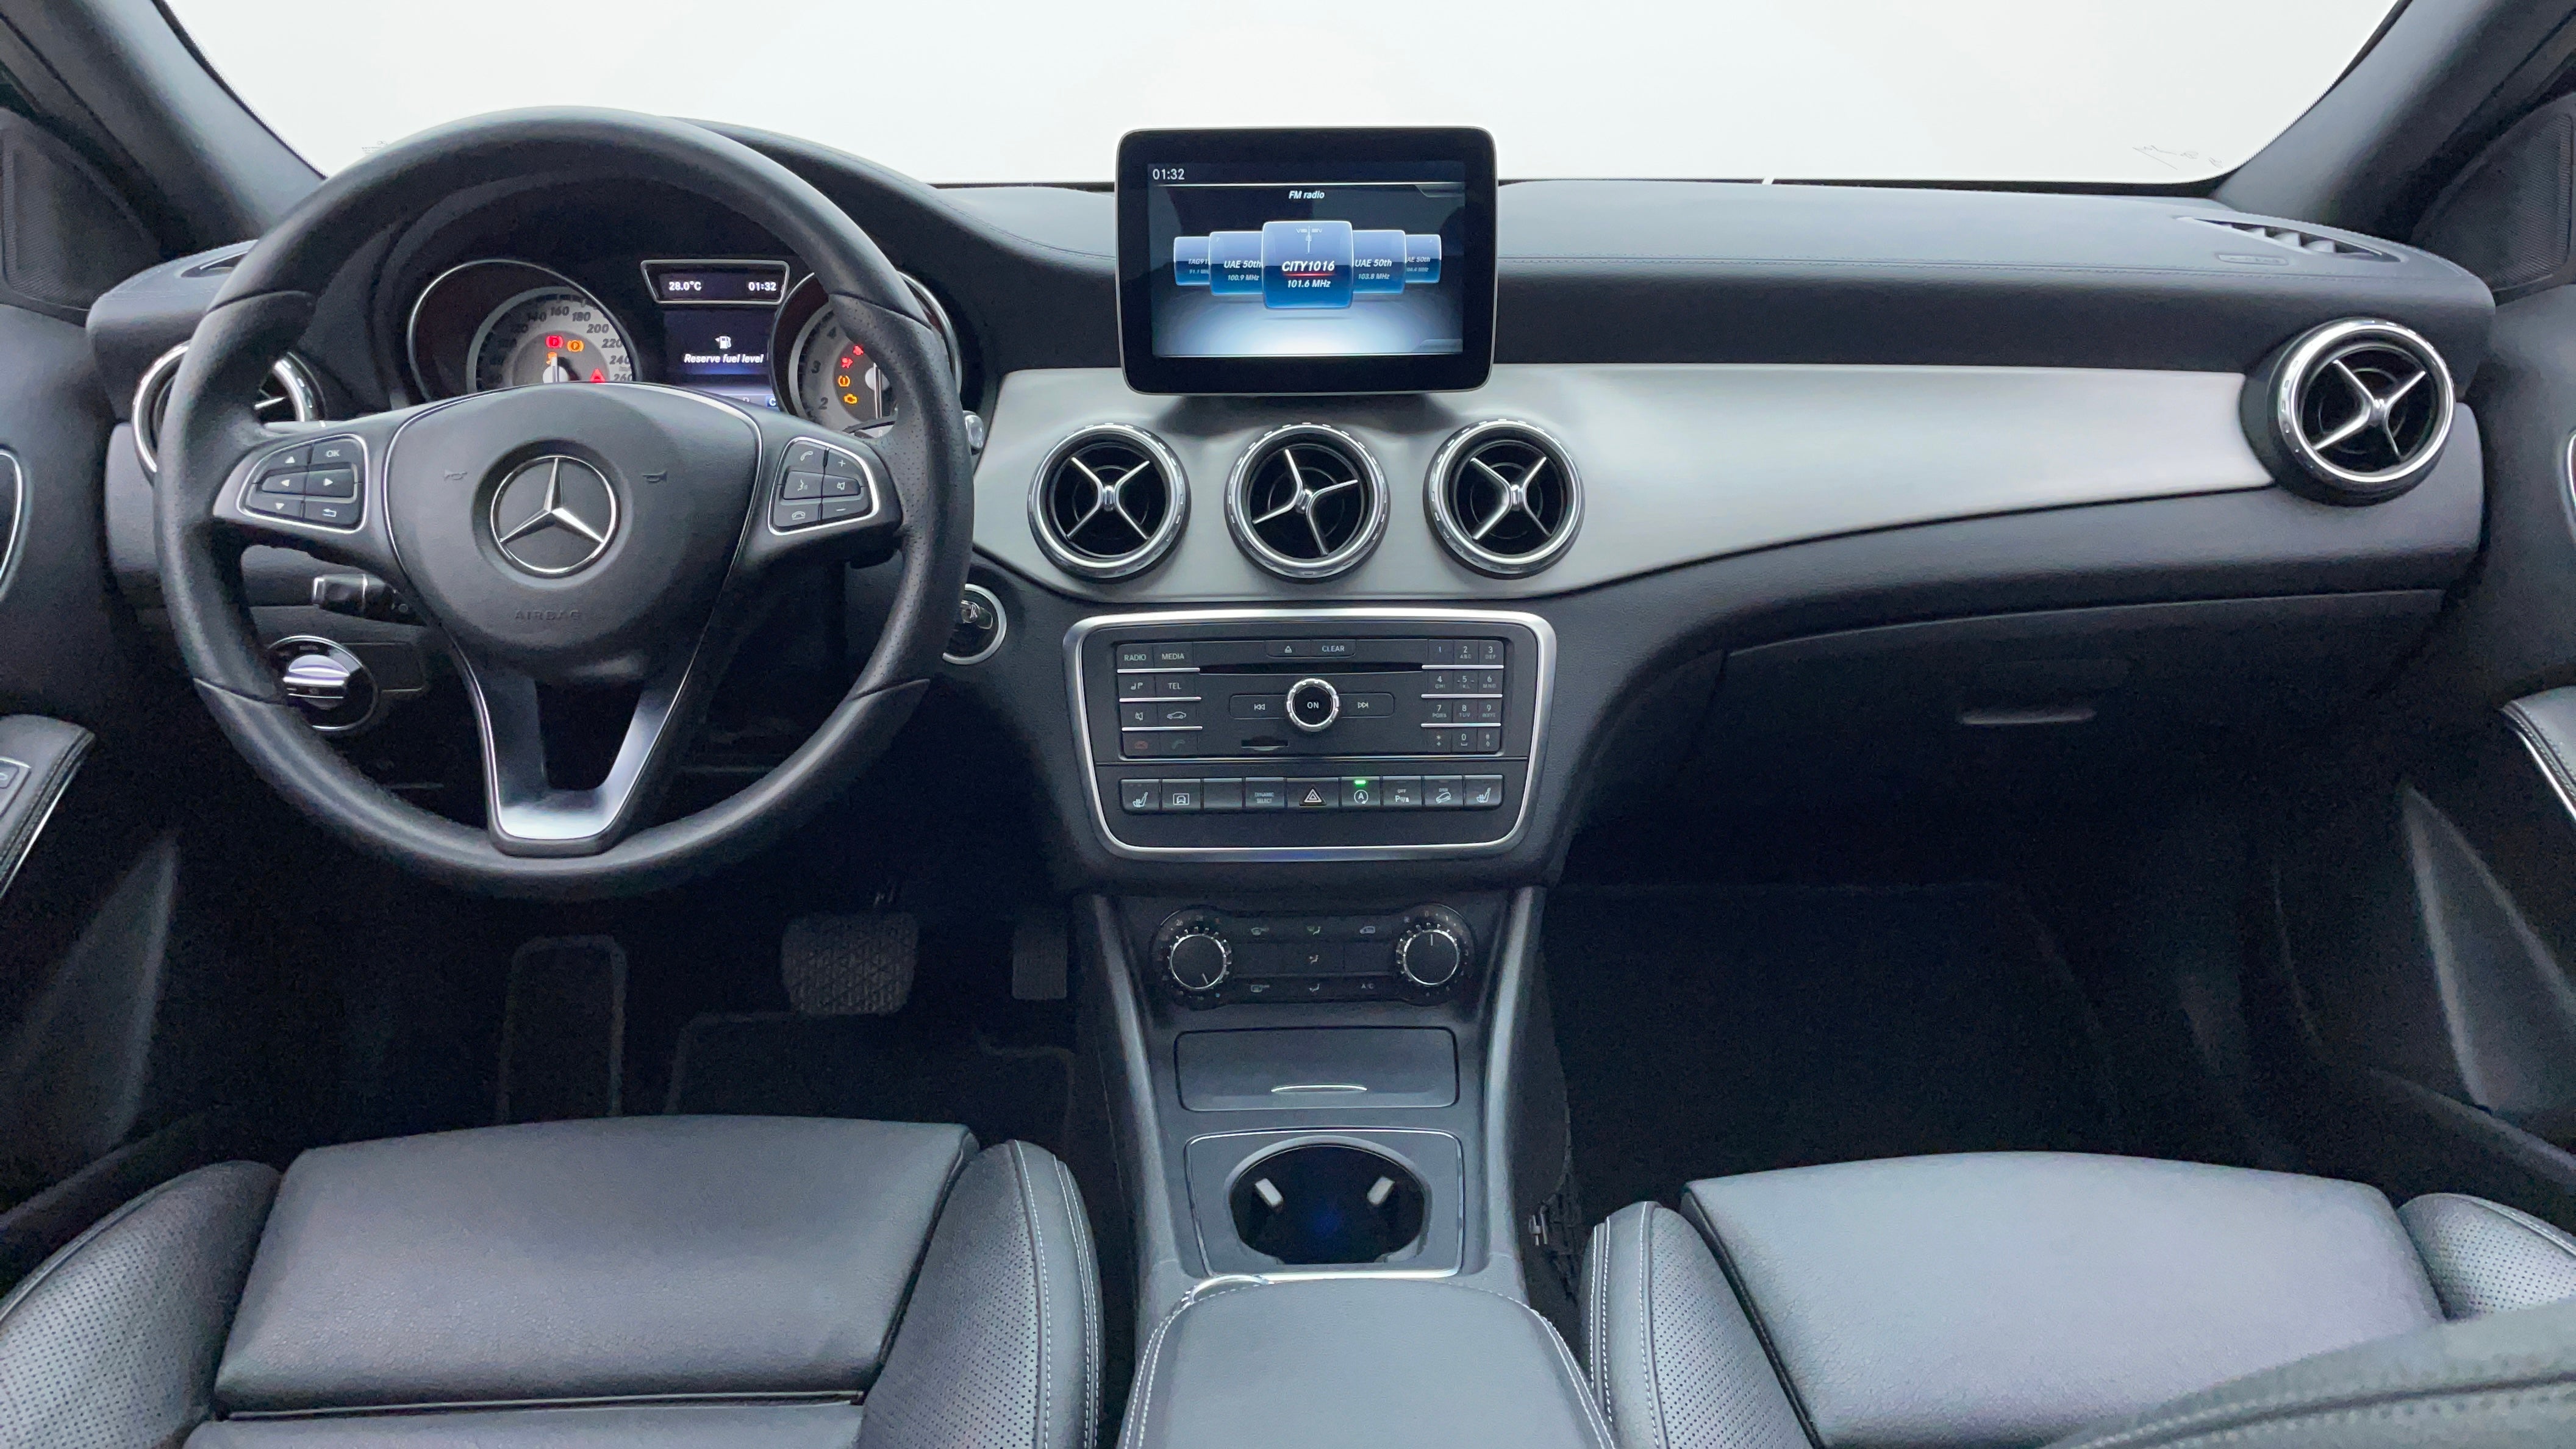 Mercedes Benz GLA Class-Dashboard View